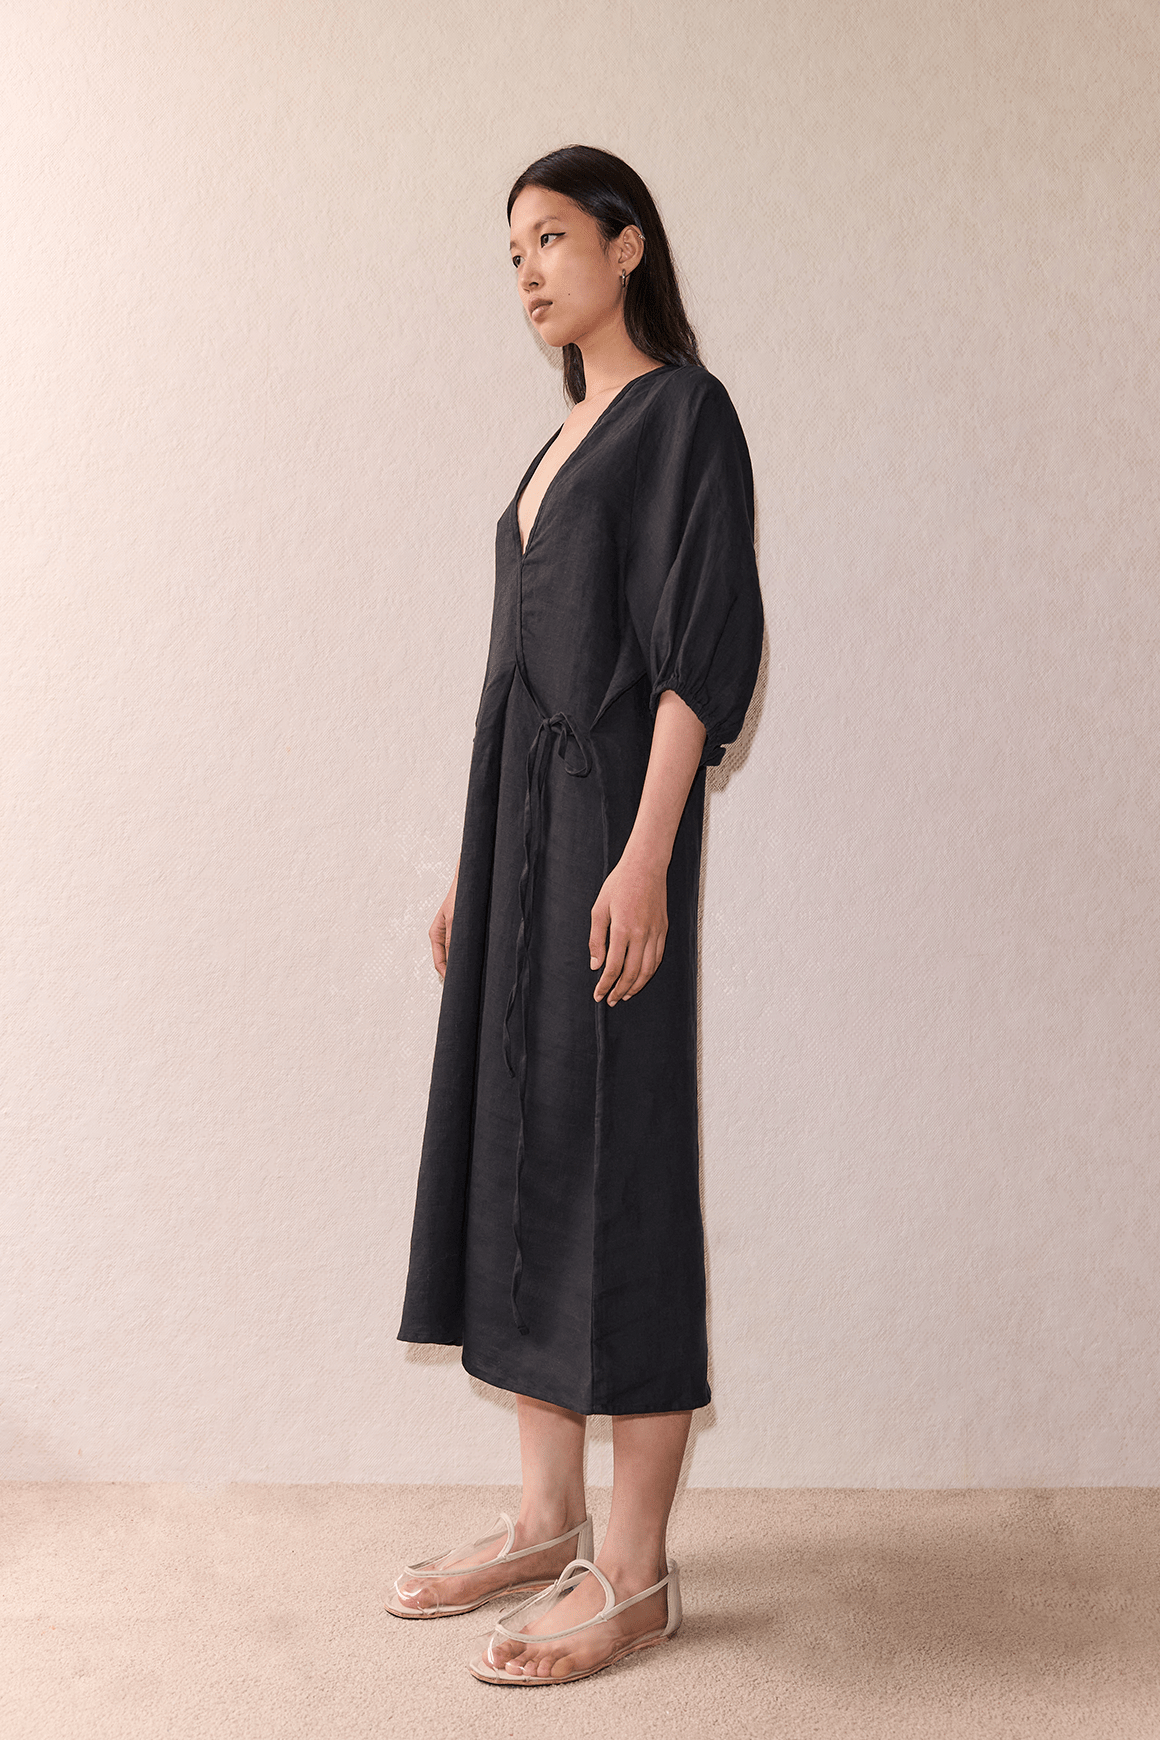 Female model wearing The Crease Bind Dress - Black by Deiji Studios against plain background